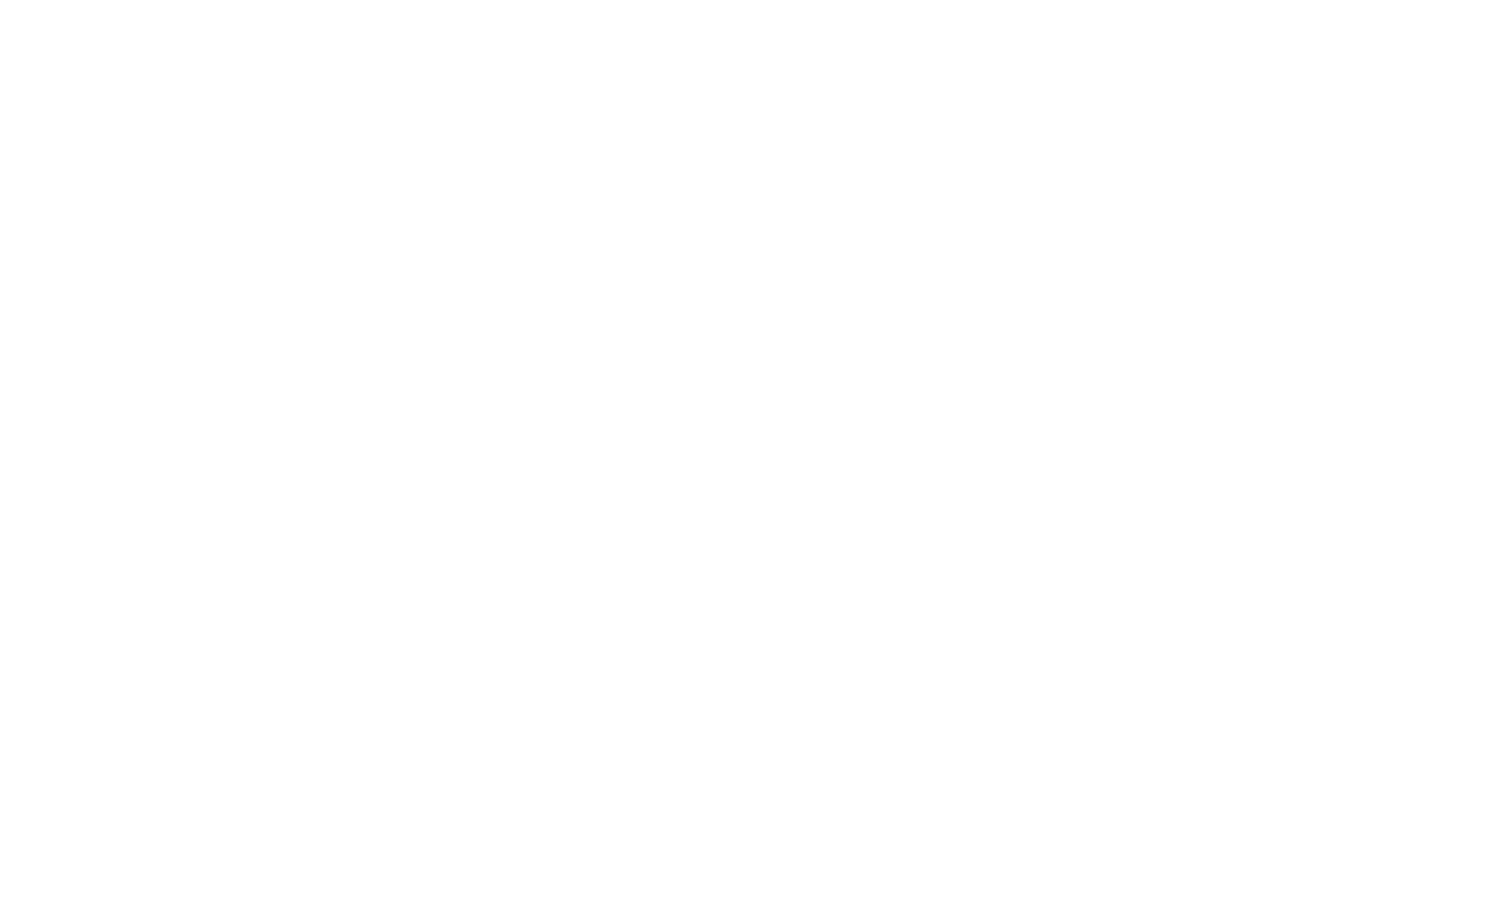 Orrstown Financial Services logo for dark backgrounds (transparent PNG)